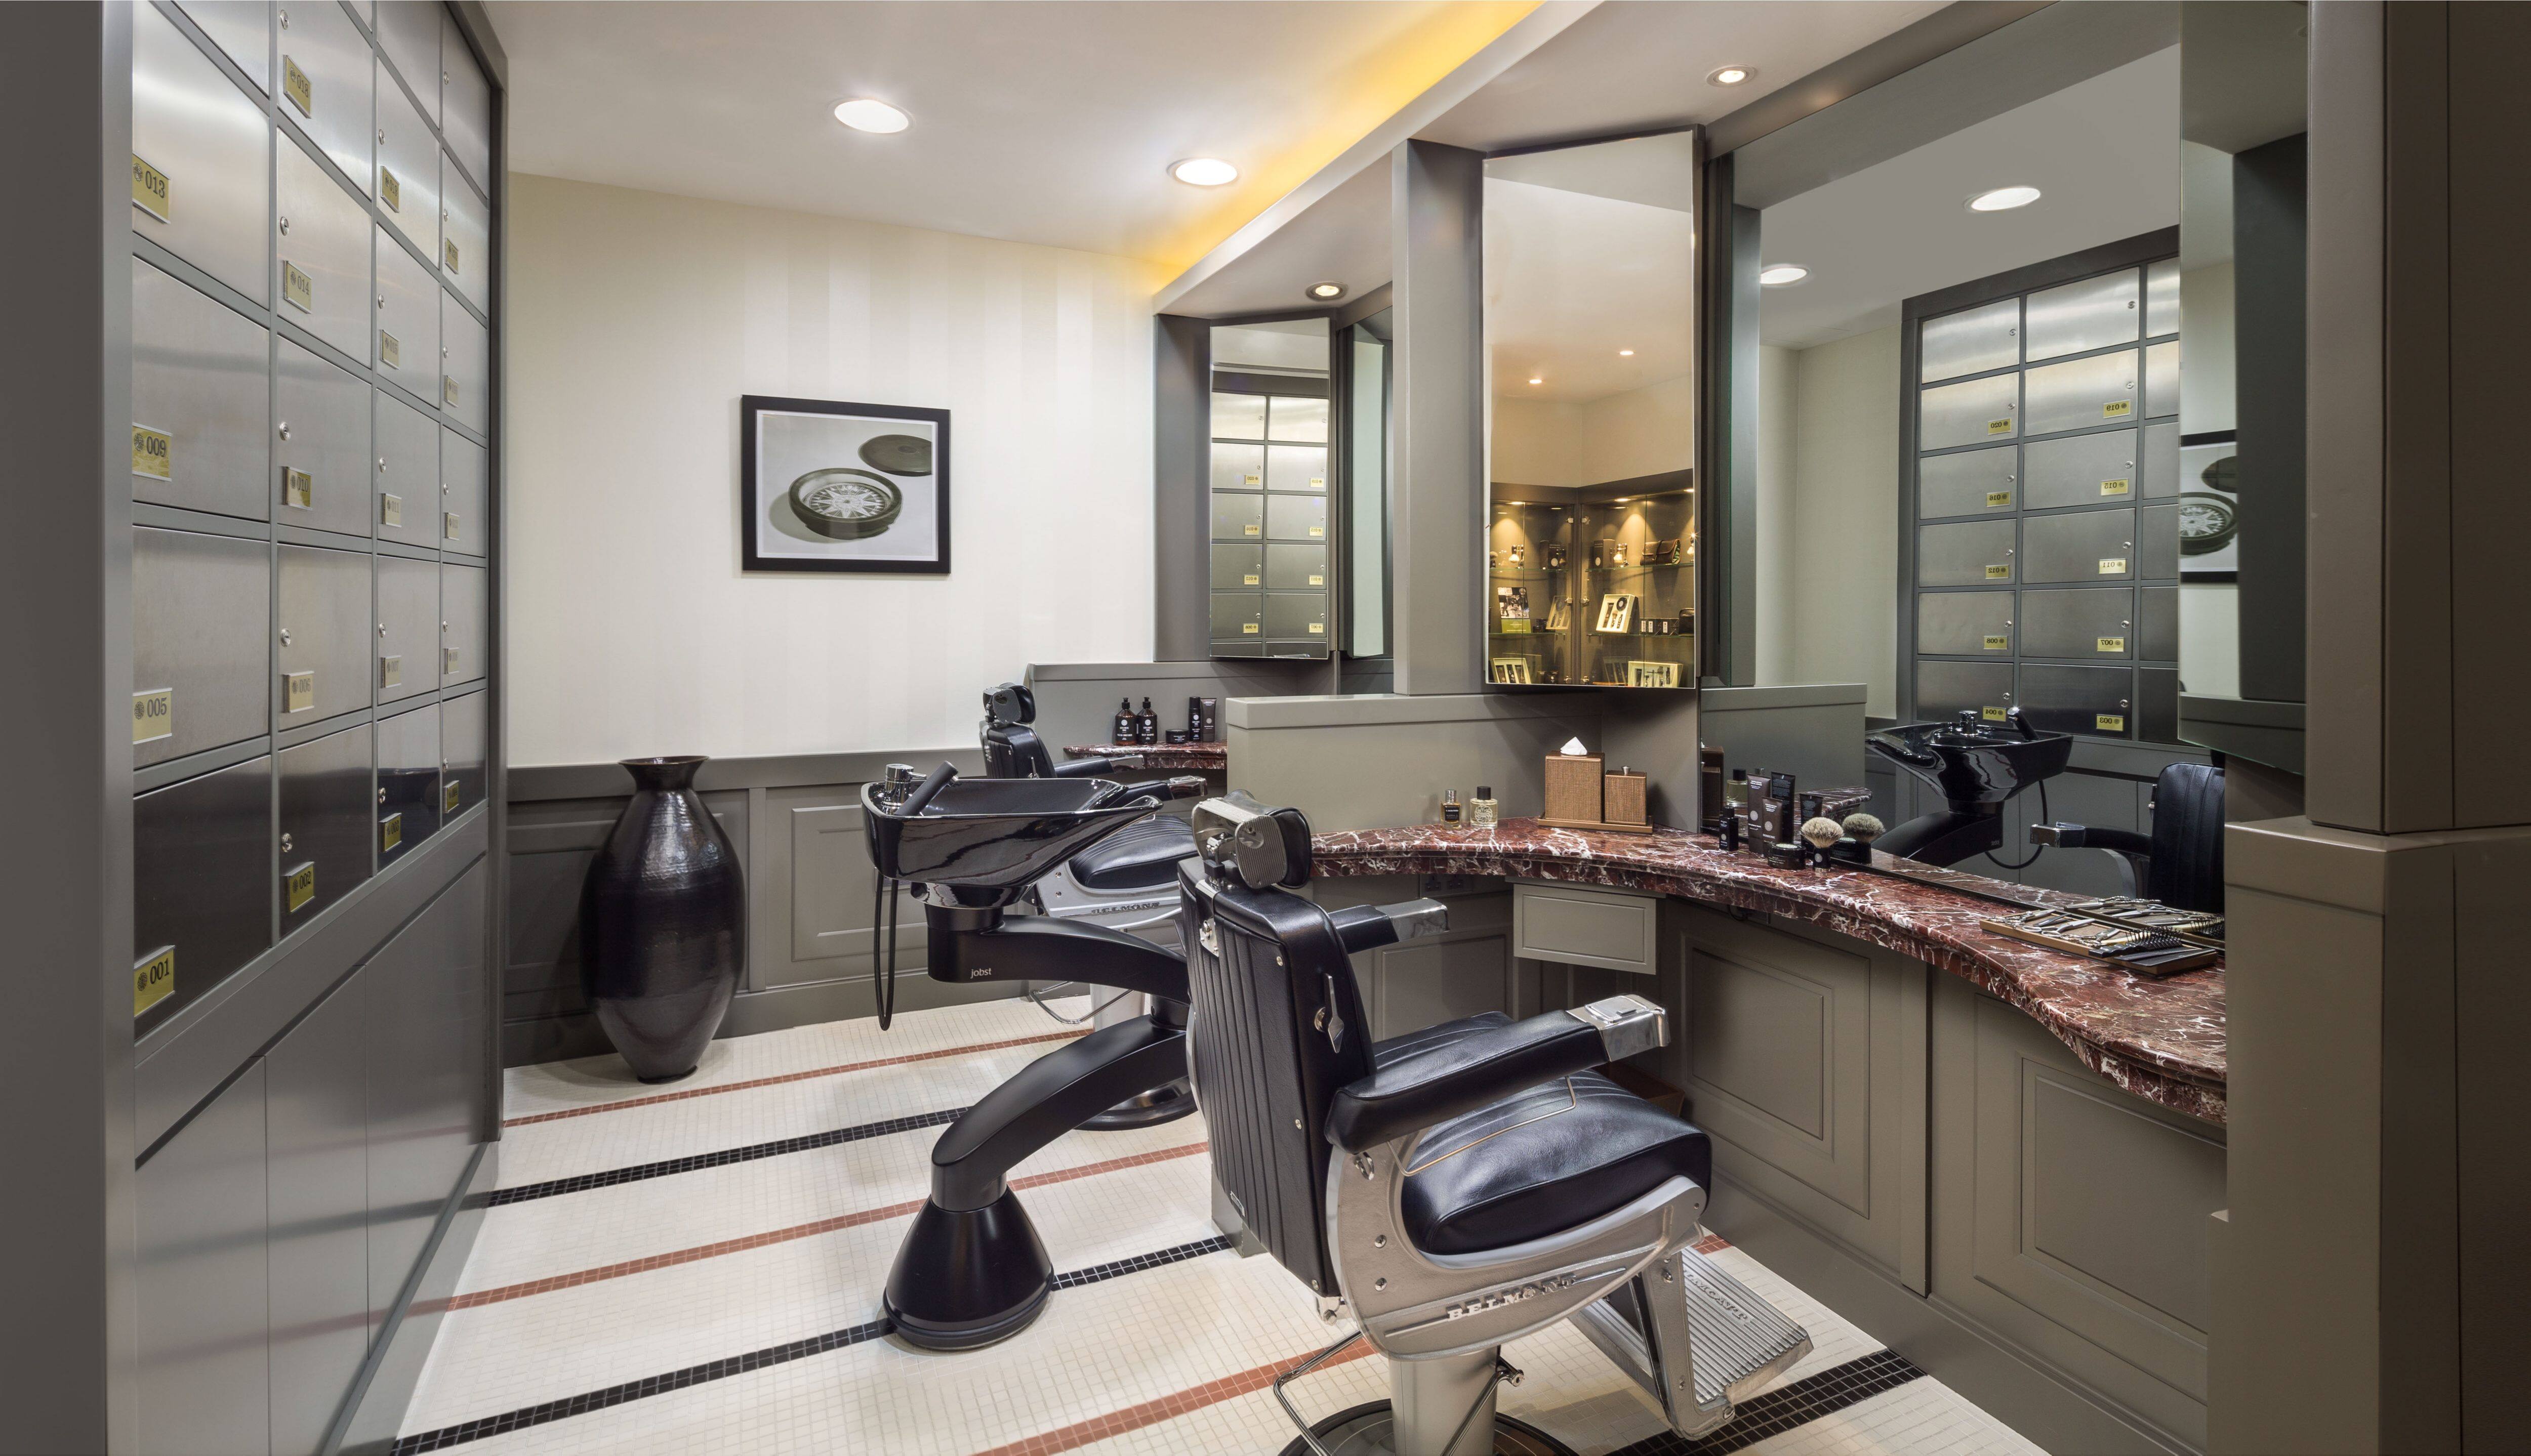 hair clippers salon services